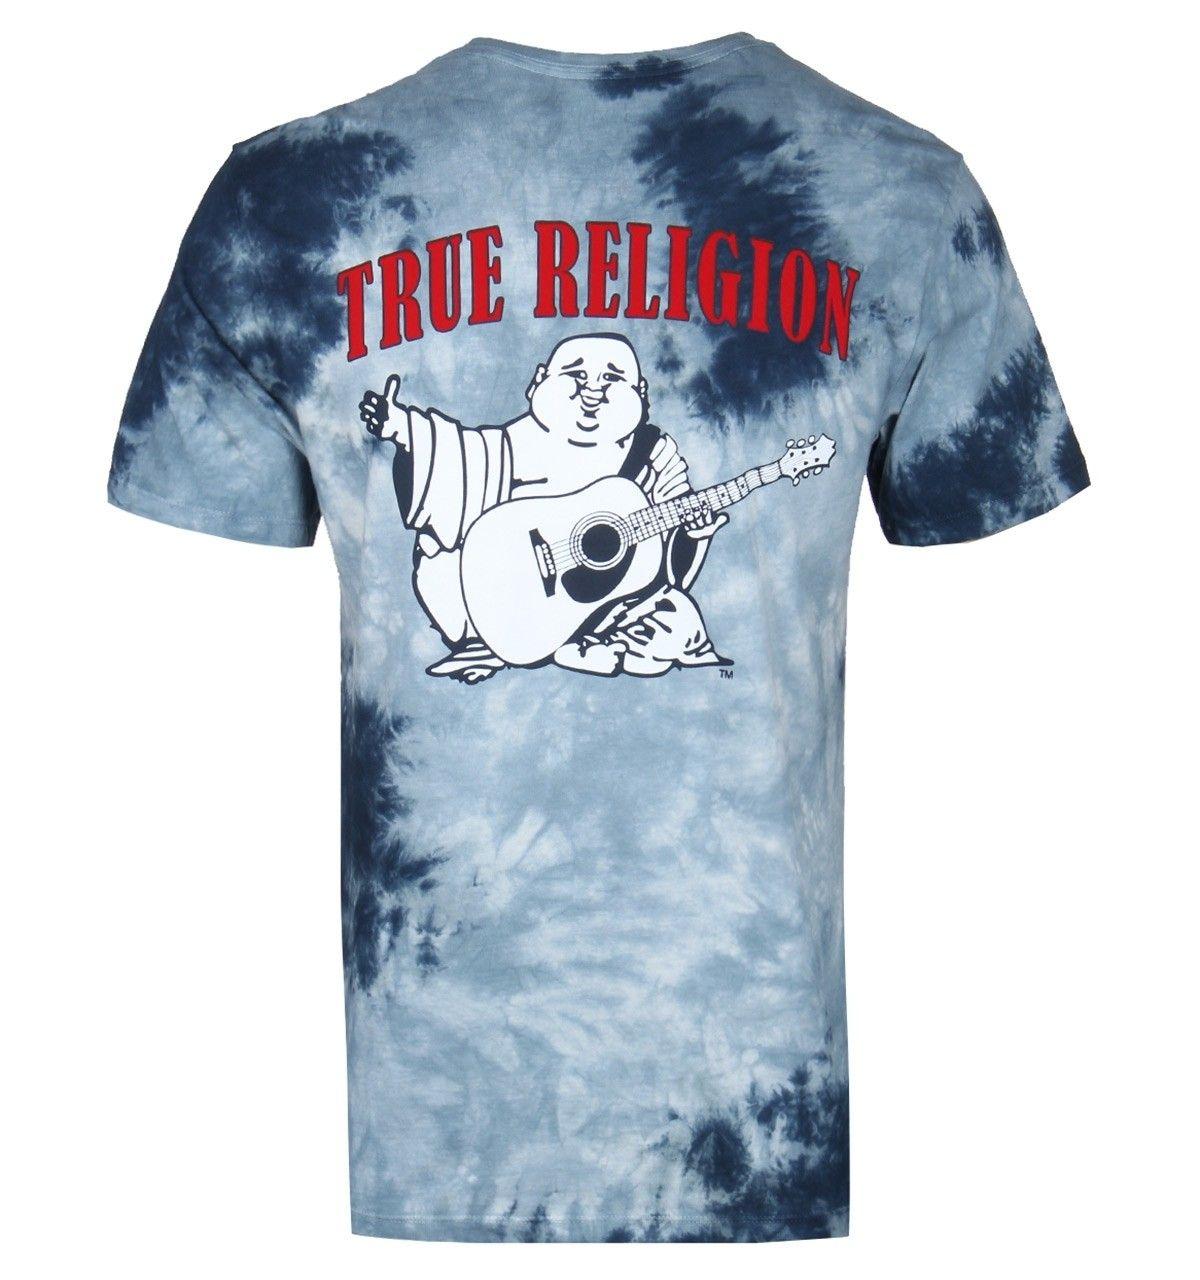 True Religion Buddha Logo - True Religion Ocean Waves Blue Tie Dye Buddha Logo Short Sleeve T Shirt